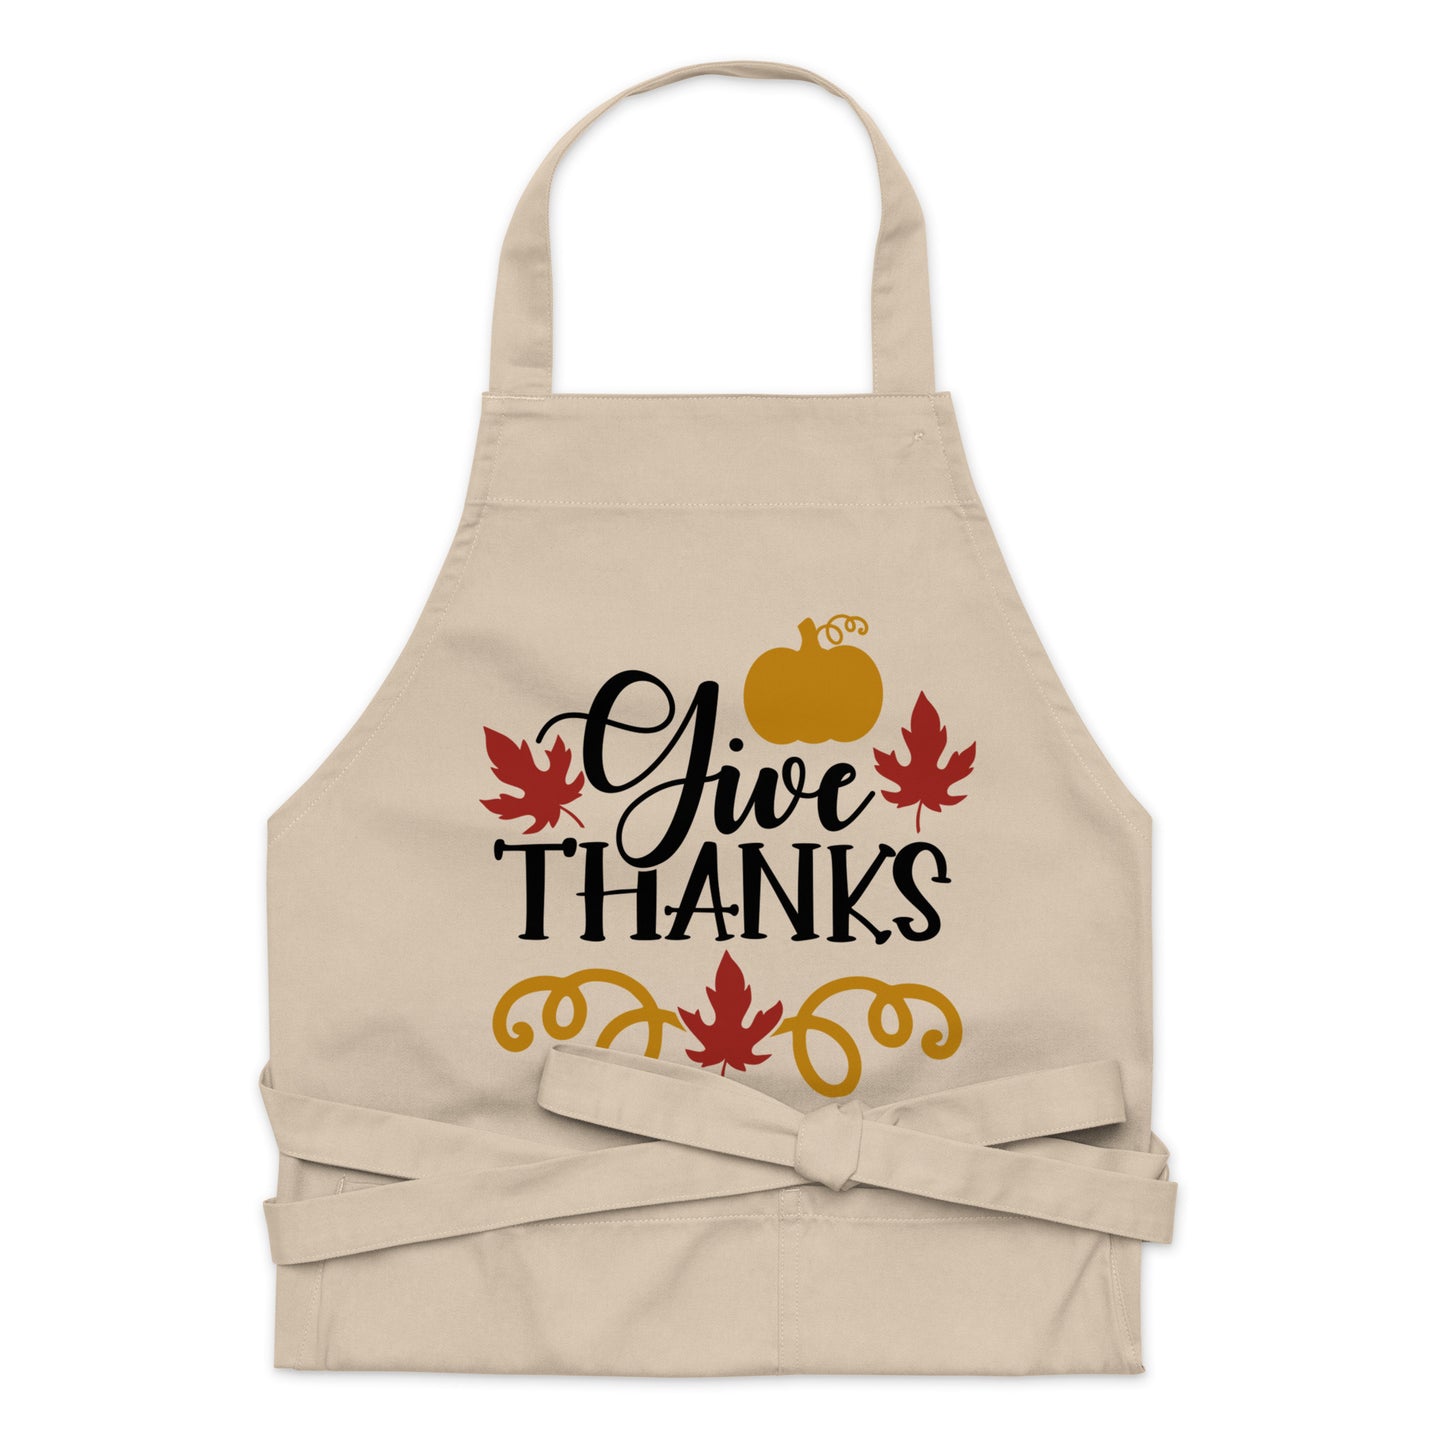 Give Thanks Organic cotton apron